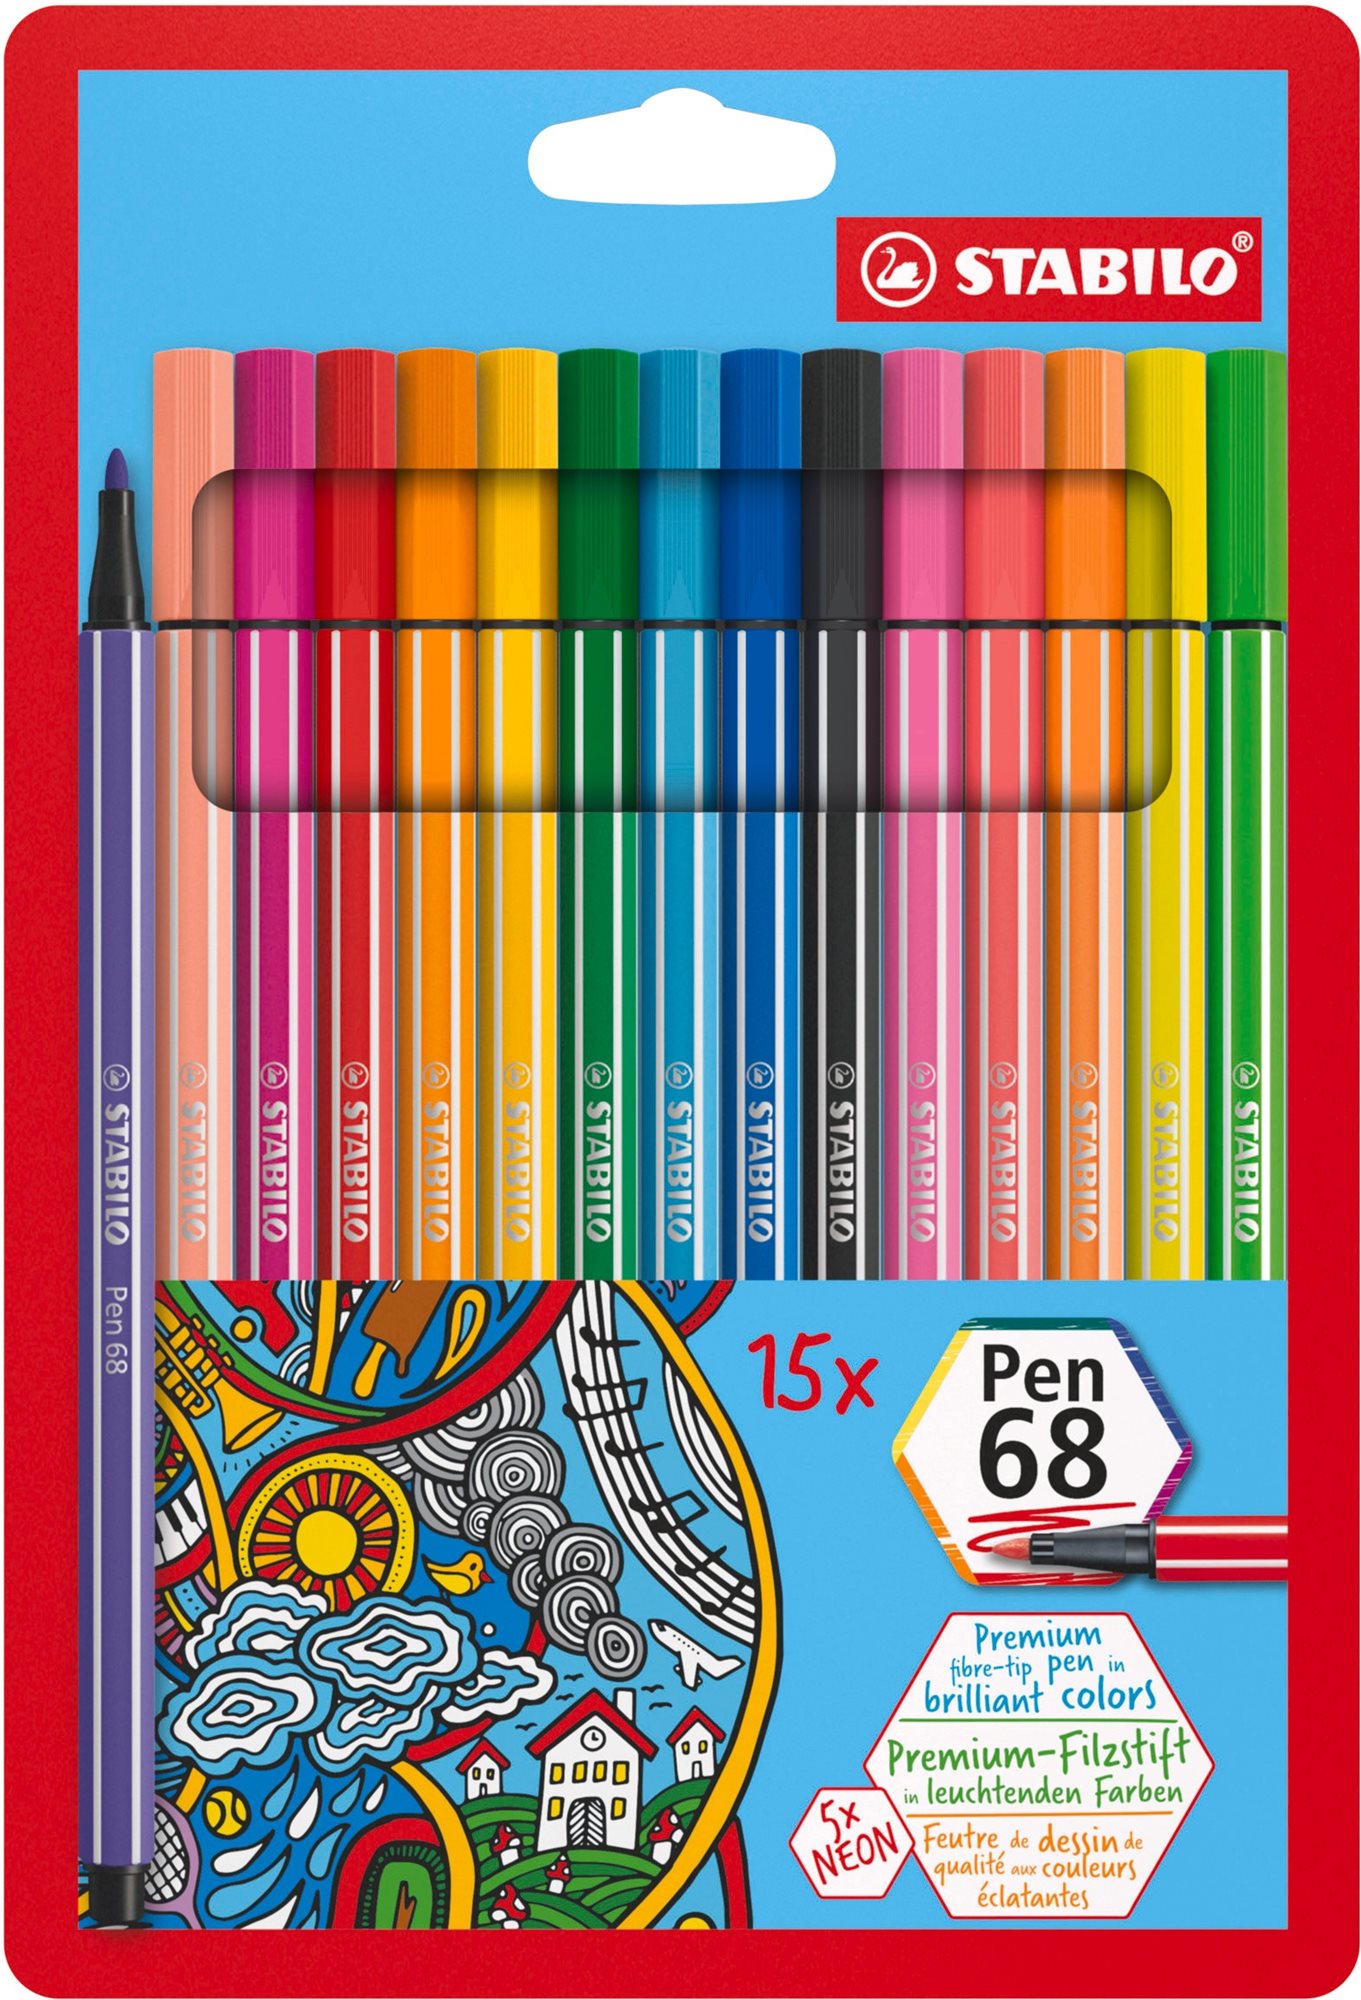 STABILO Pen 68 10+5 neon tok